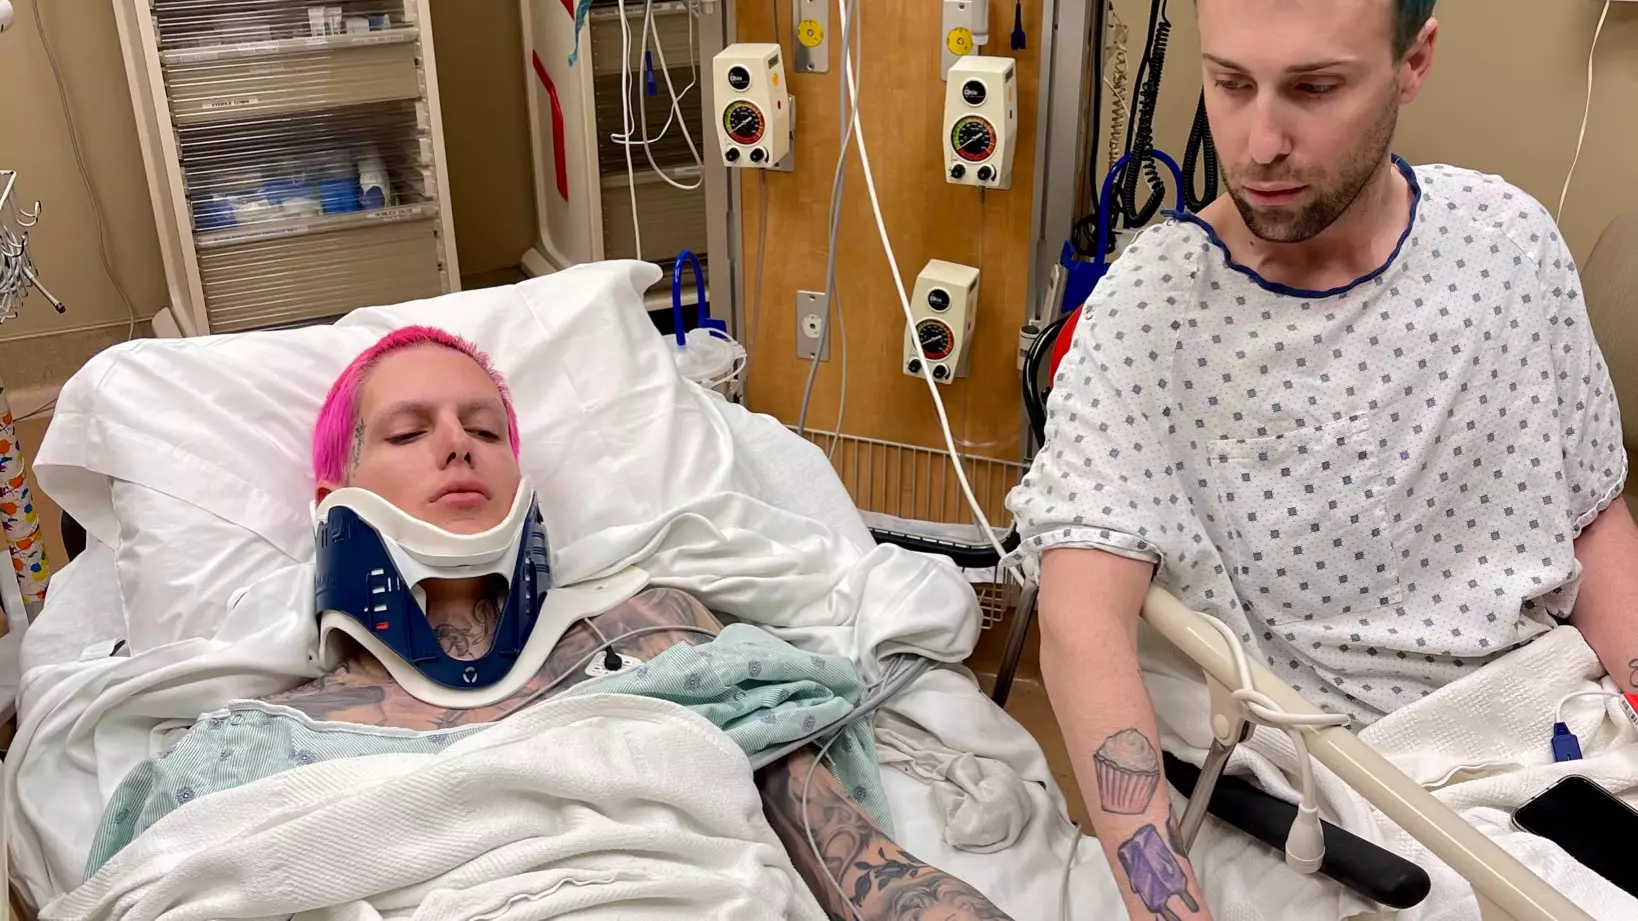 YouTuber Jeffree Star Hospitalised After 'Severe Car Accident'